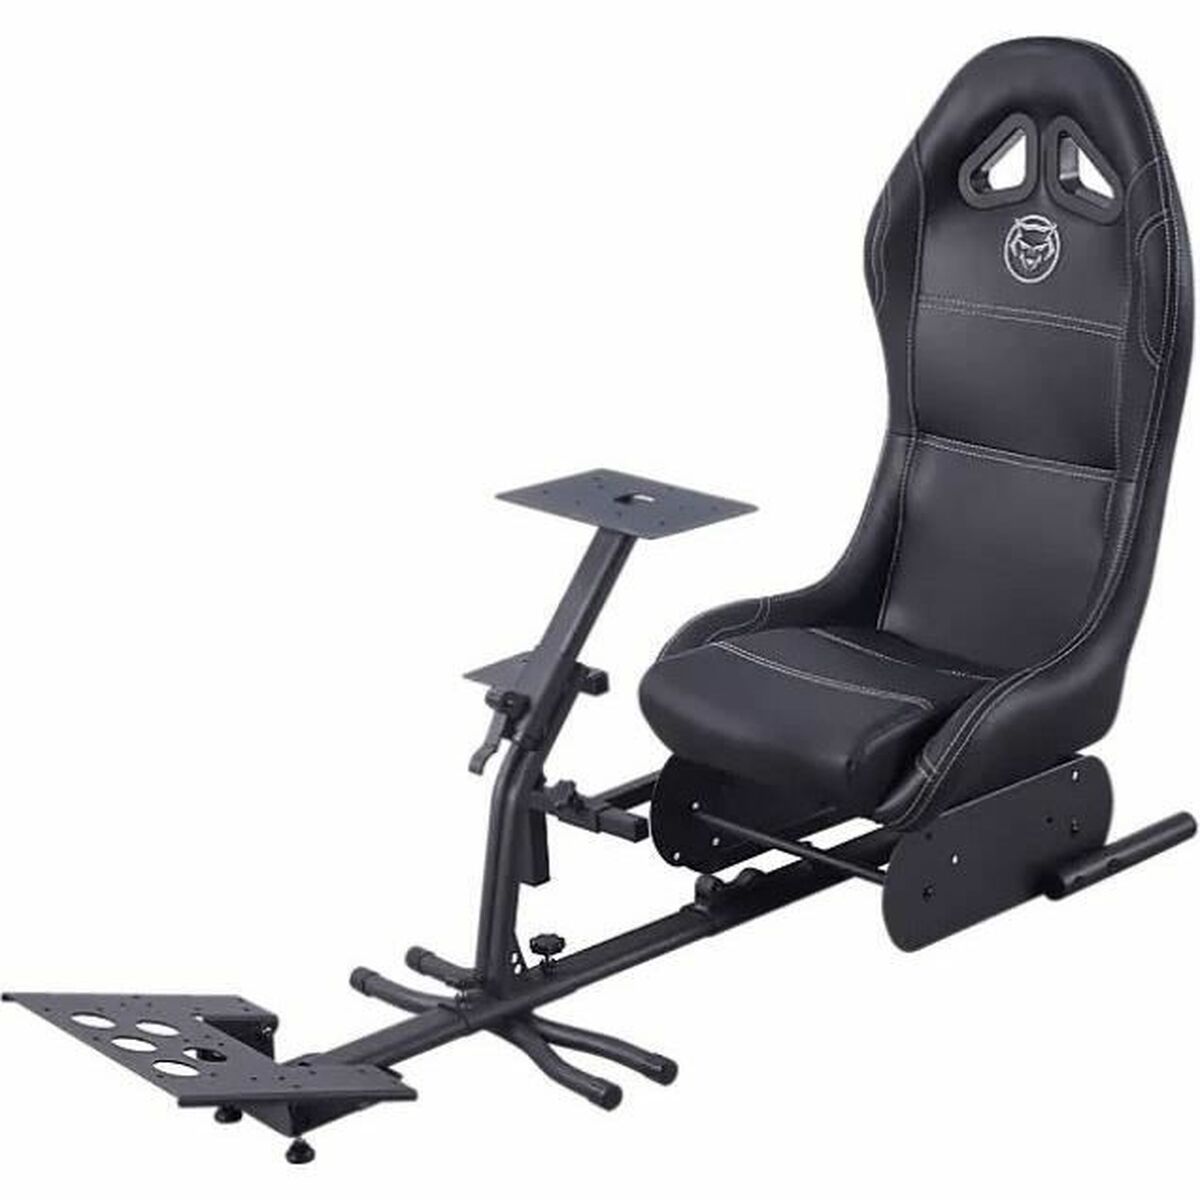 Racersæde Mobility Lab Qware Gaming Race Seat Sort 60 x 48 x 51 cm